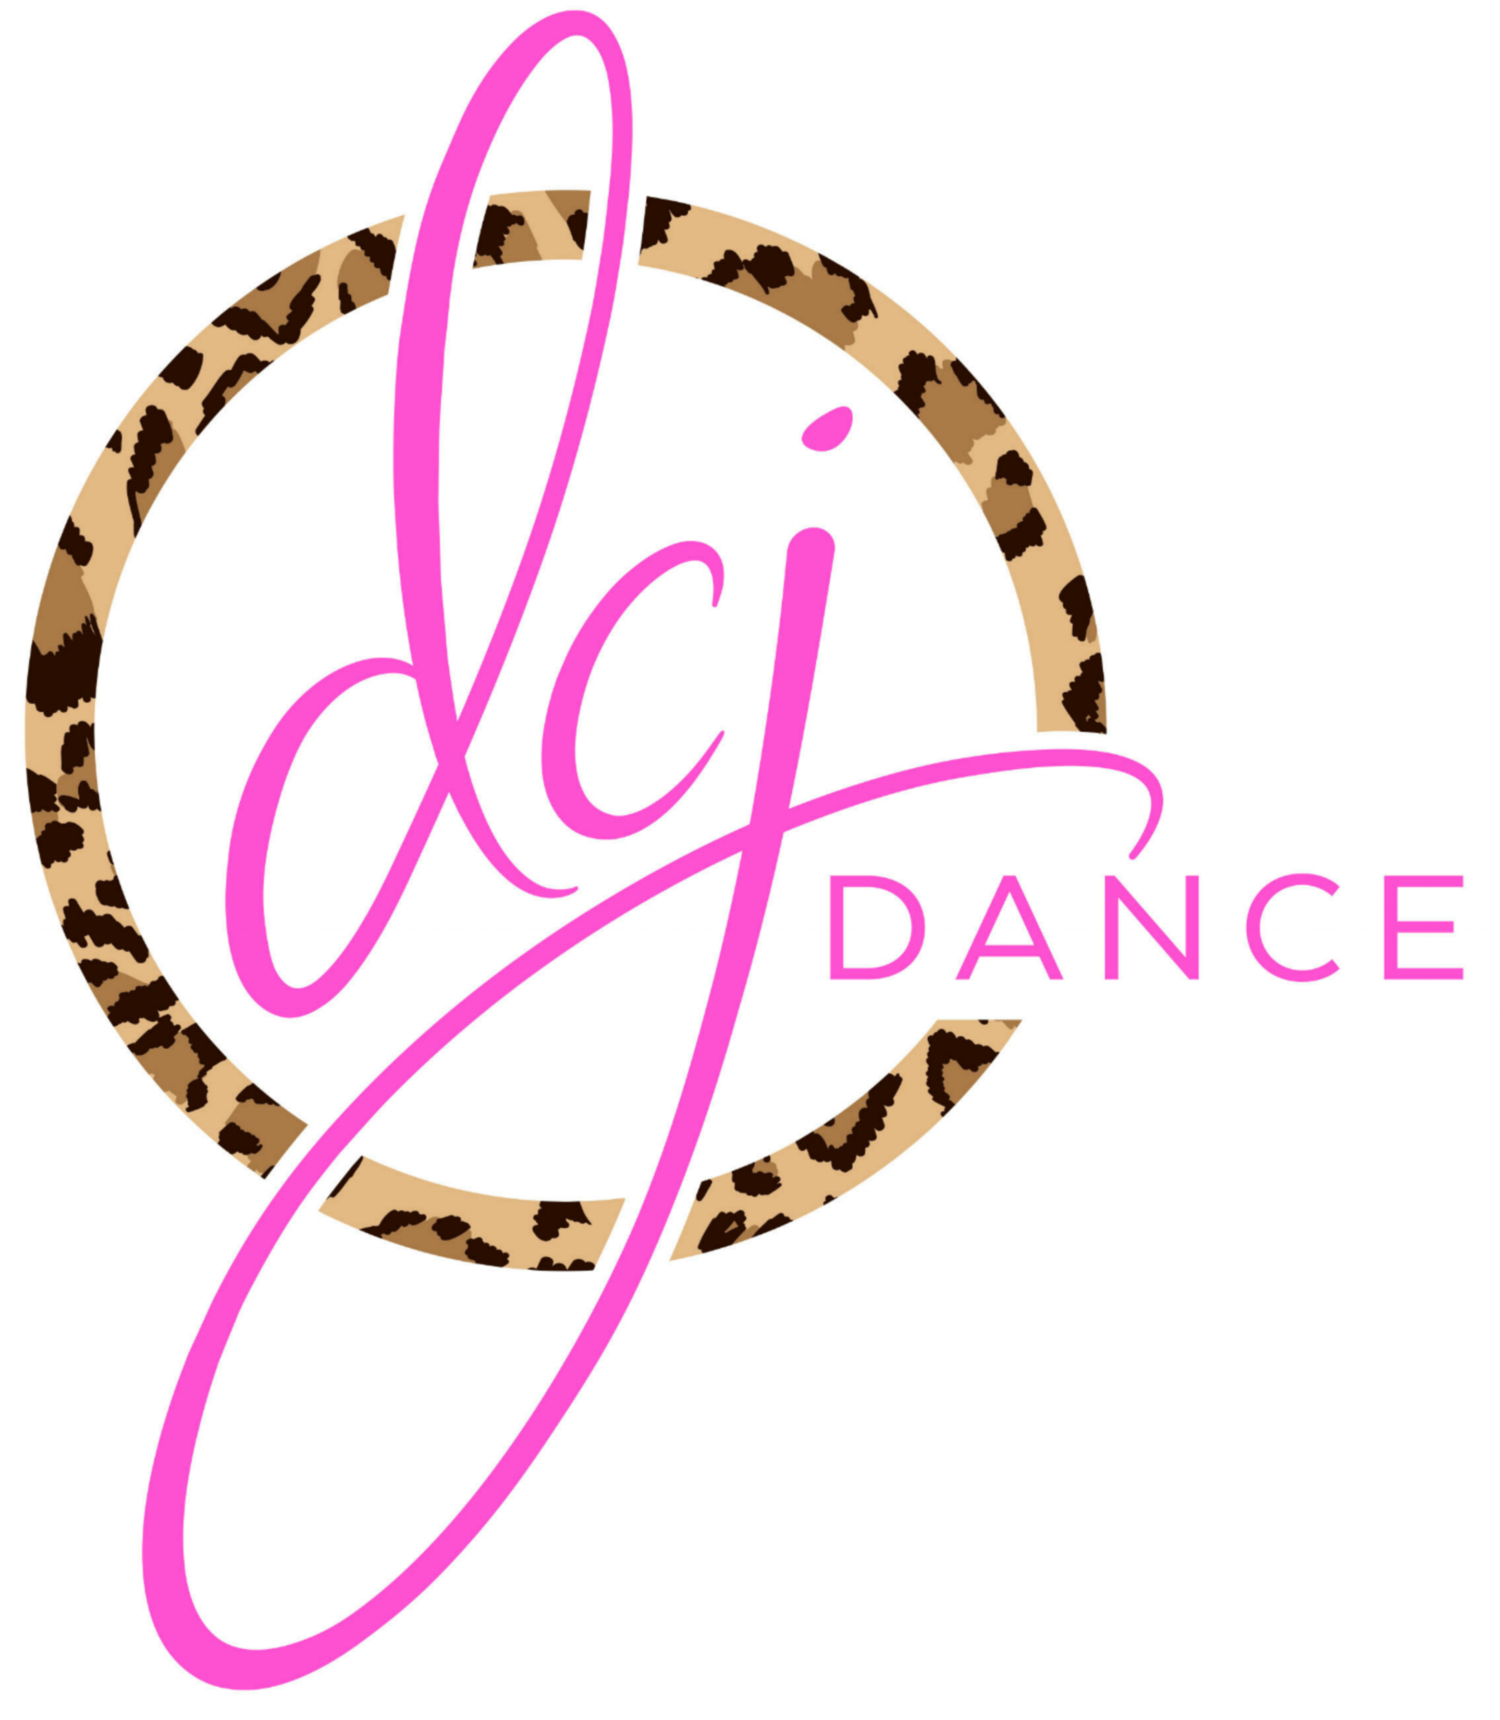 DCJ Dance